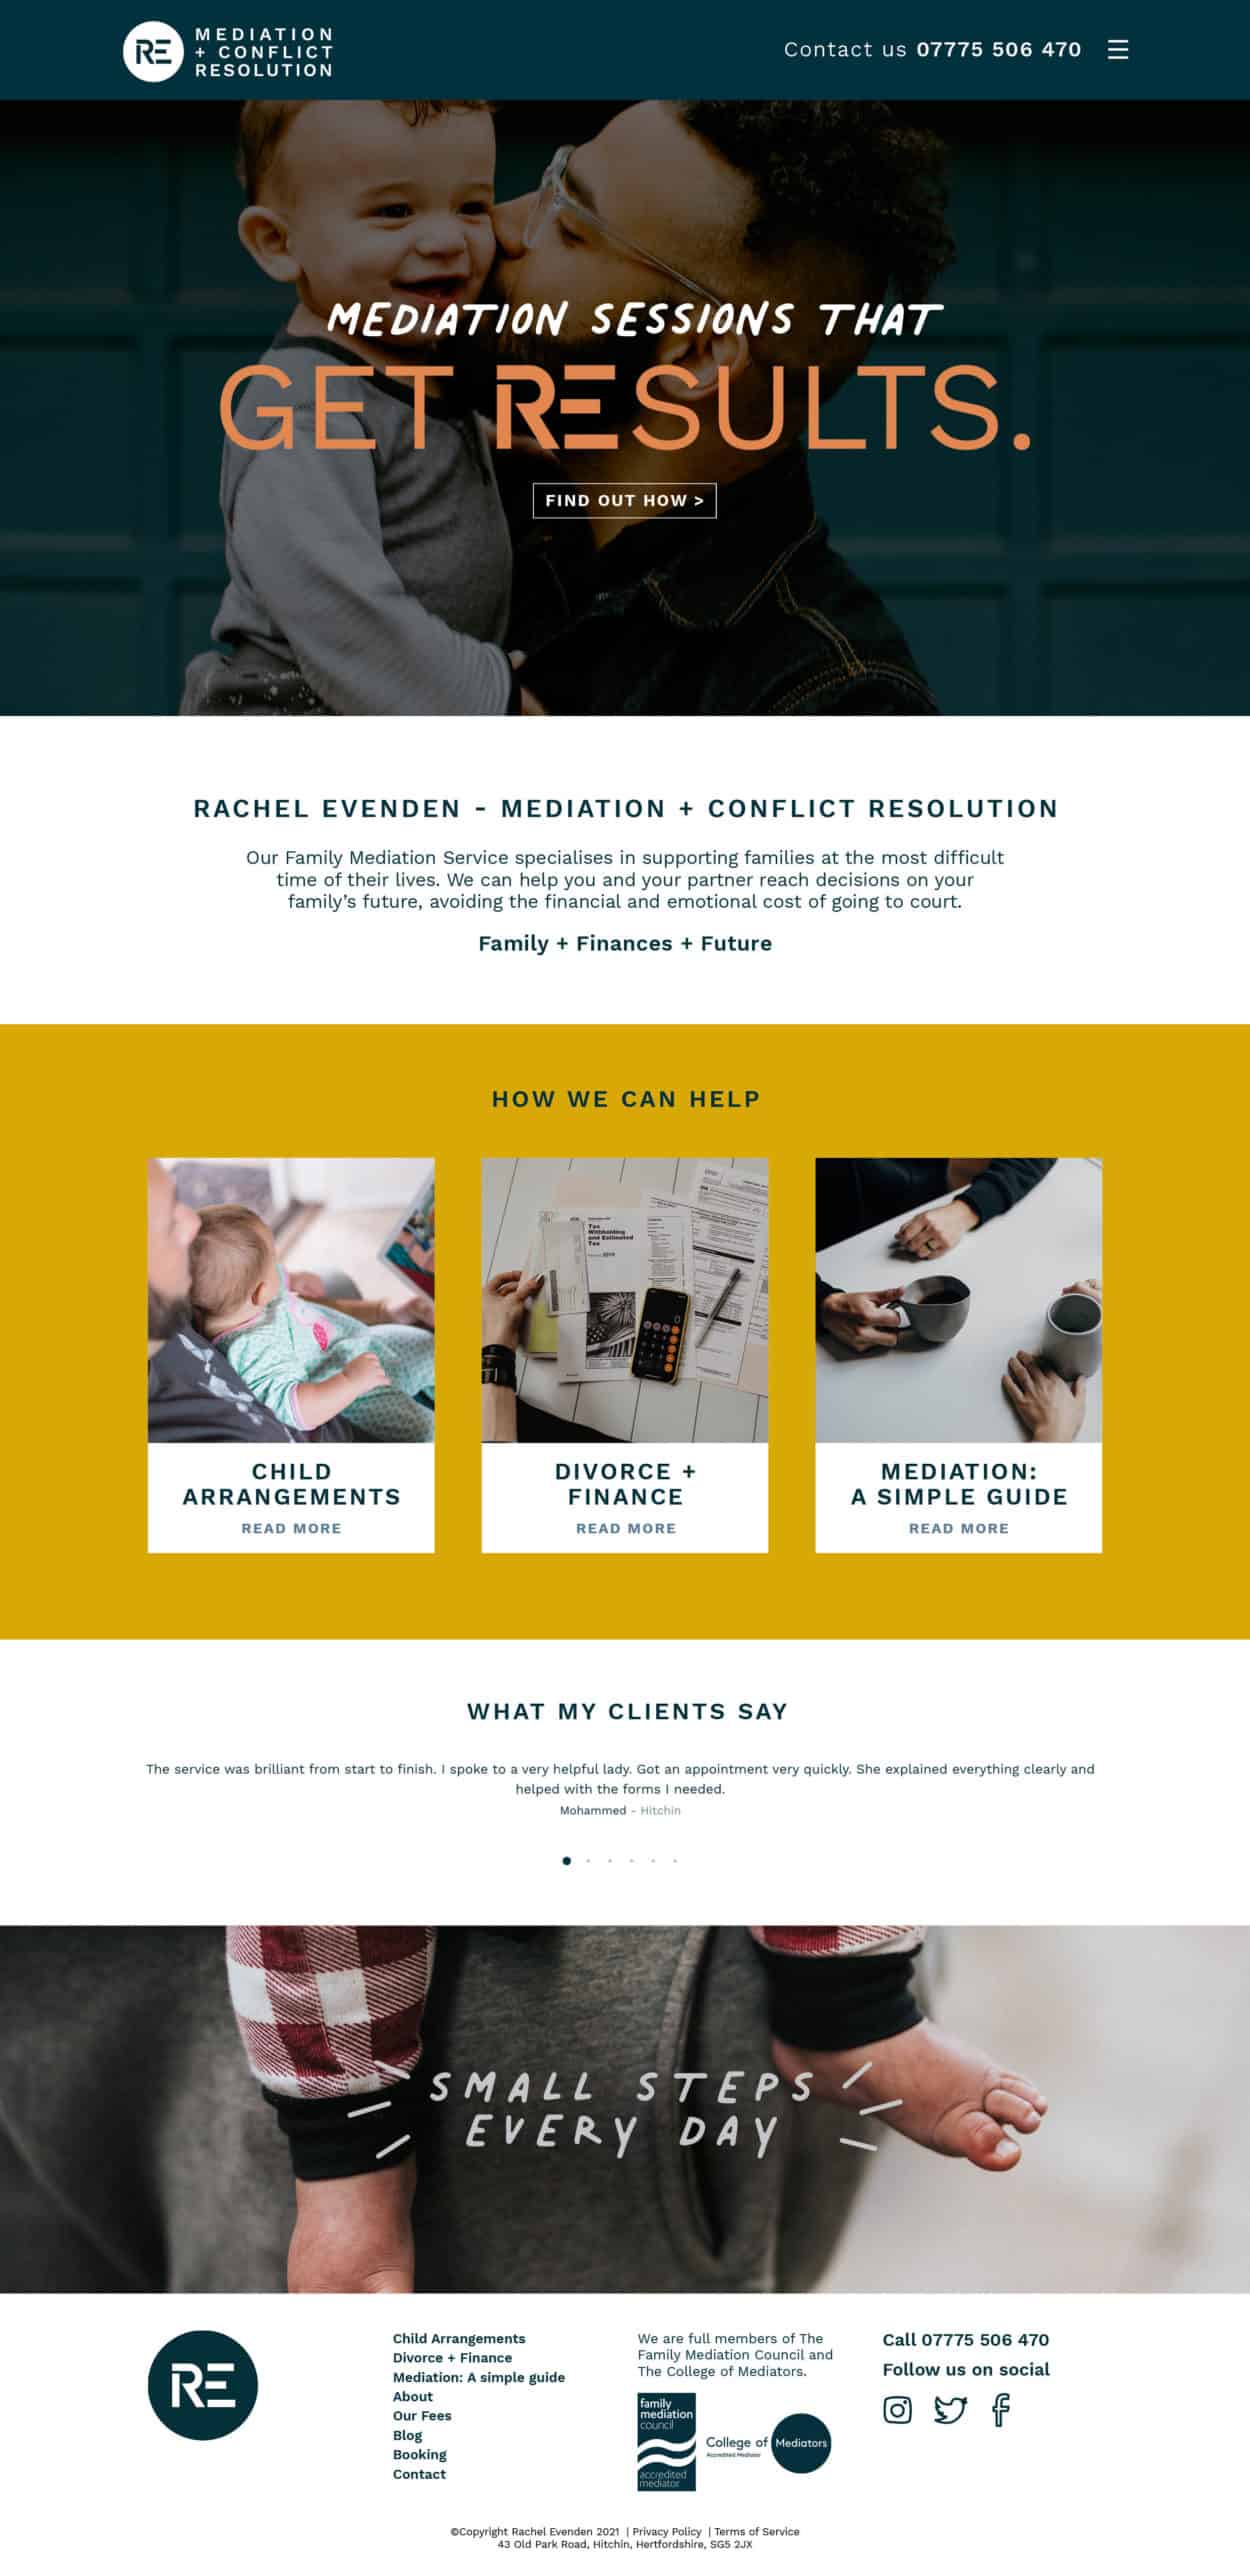 Rachel Evenden Mediation & Conflict Resolution website design layout